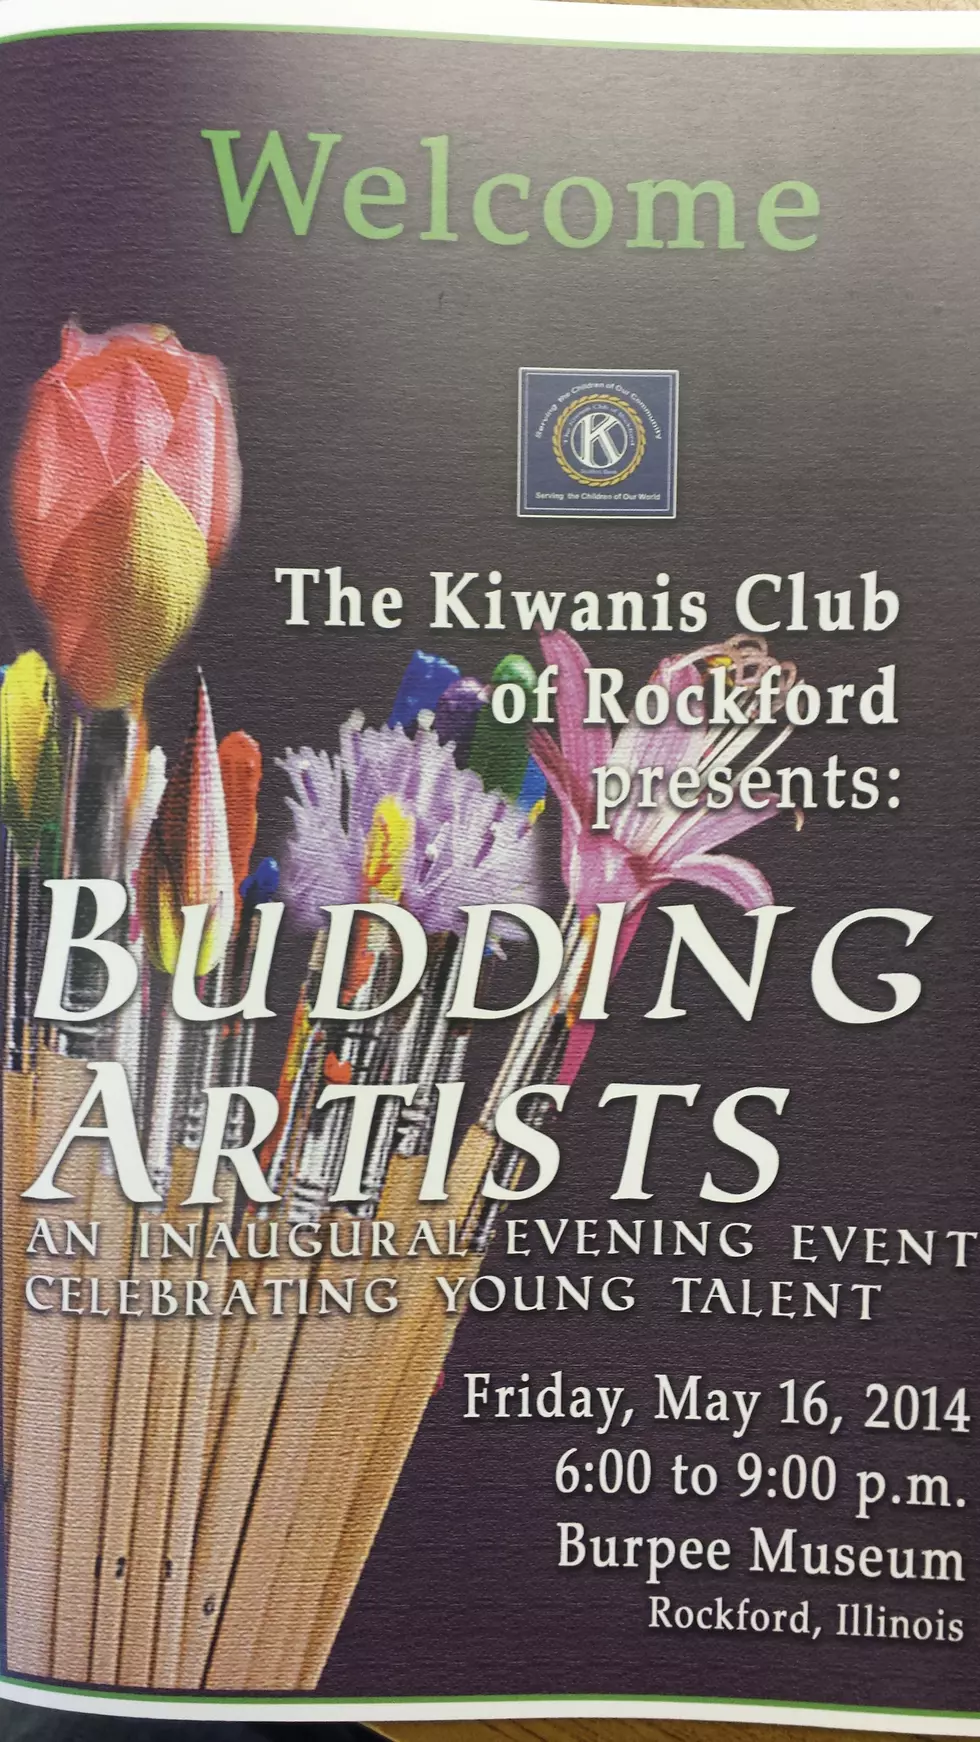 Kiwanis Club Hosts "Budding Artists" Fundraiser